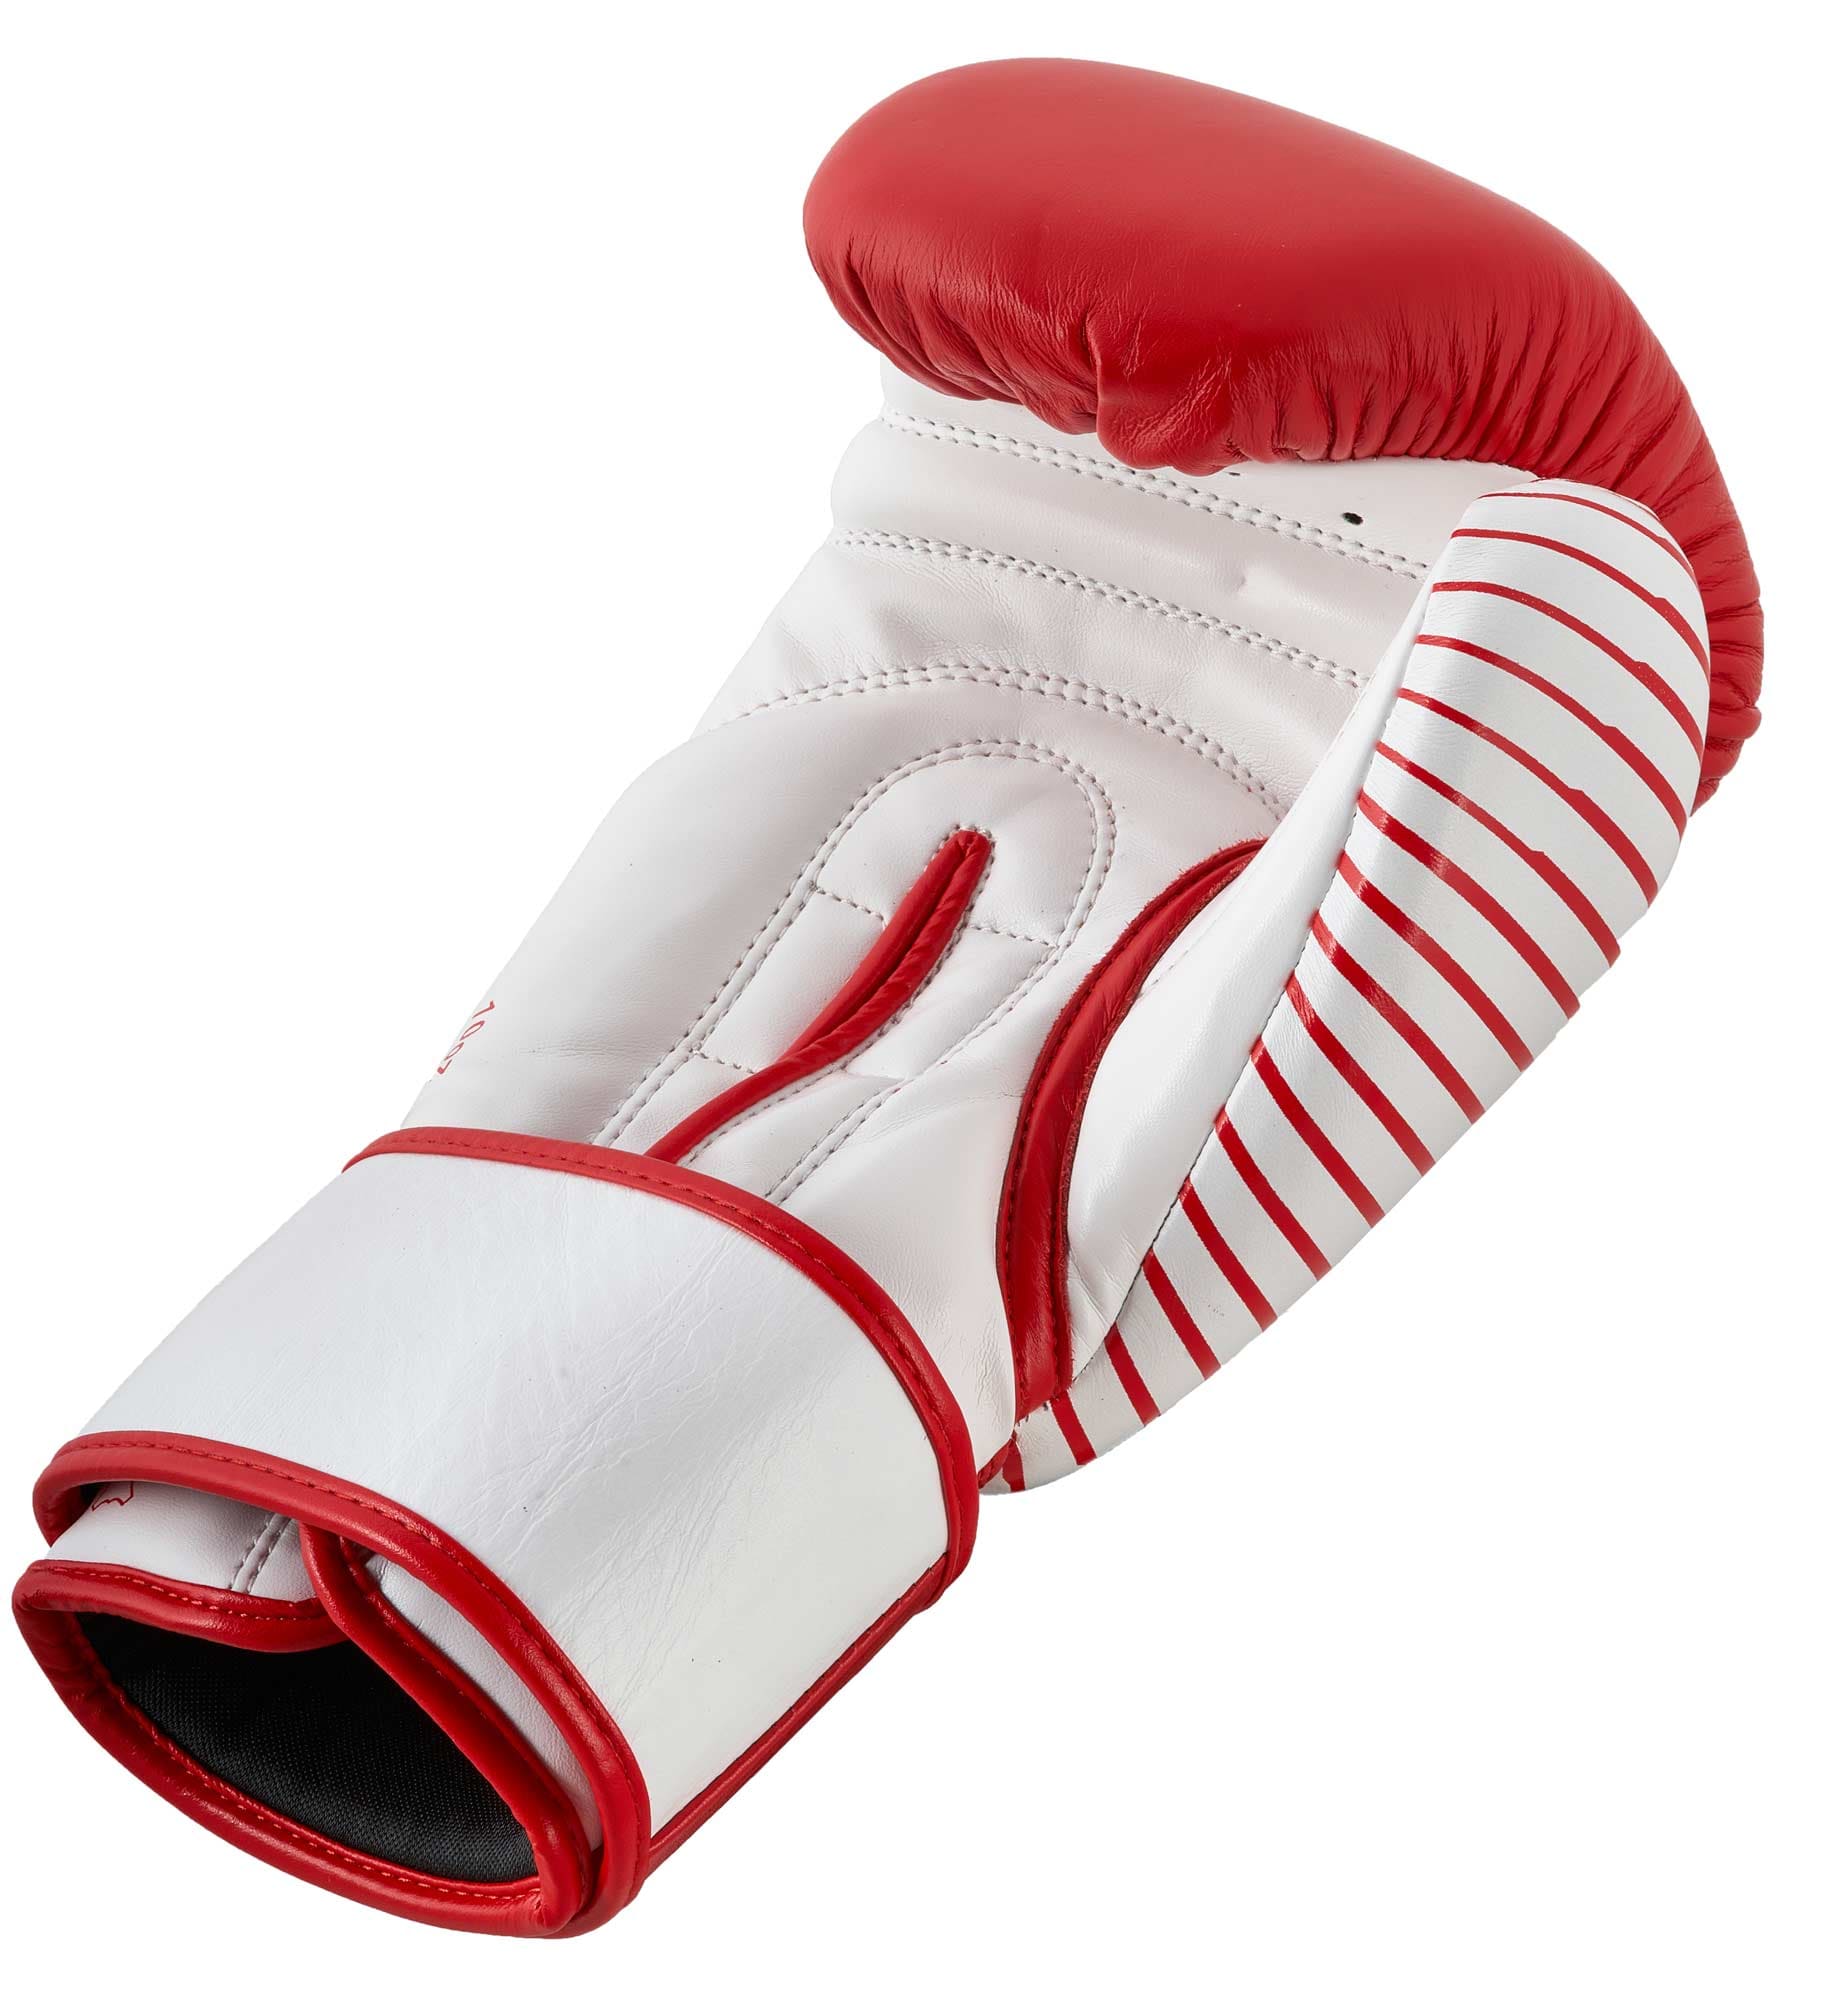 Adidas Kickboxing Wettkampf Boxhandschuhe 10oz Rot/Weiß Online kaufen ✓ |  EMPAROR